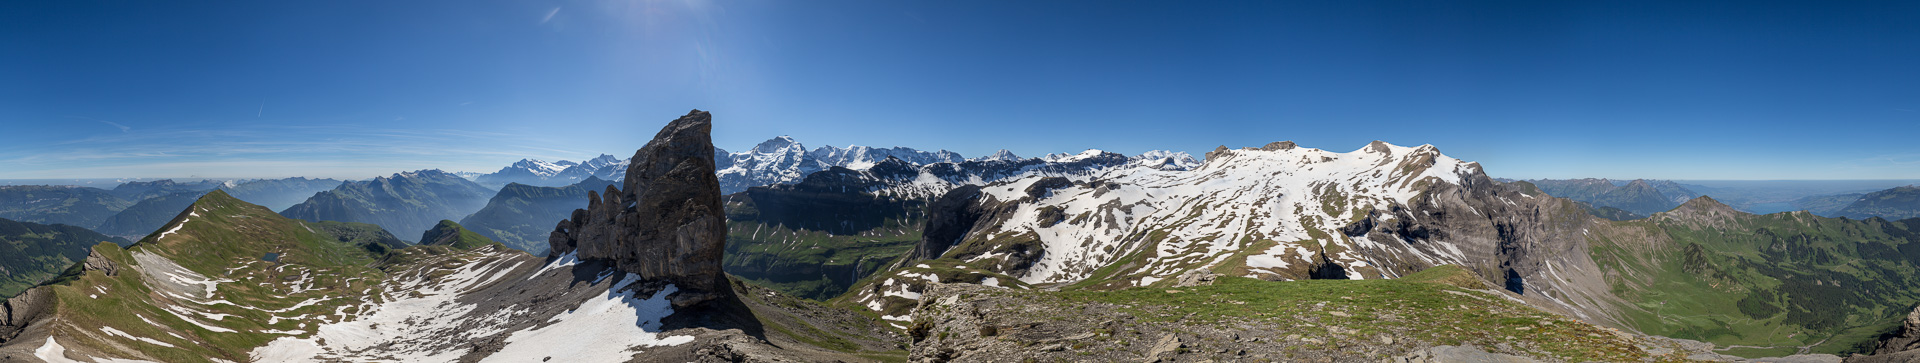 Gipfelpanorama - imposant der Blick zum großen Lobhorn. - Demnächst mit Link zu mountainpanoramas.